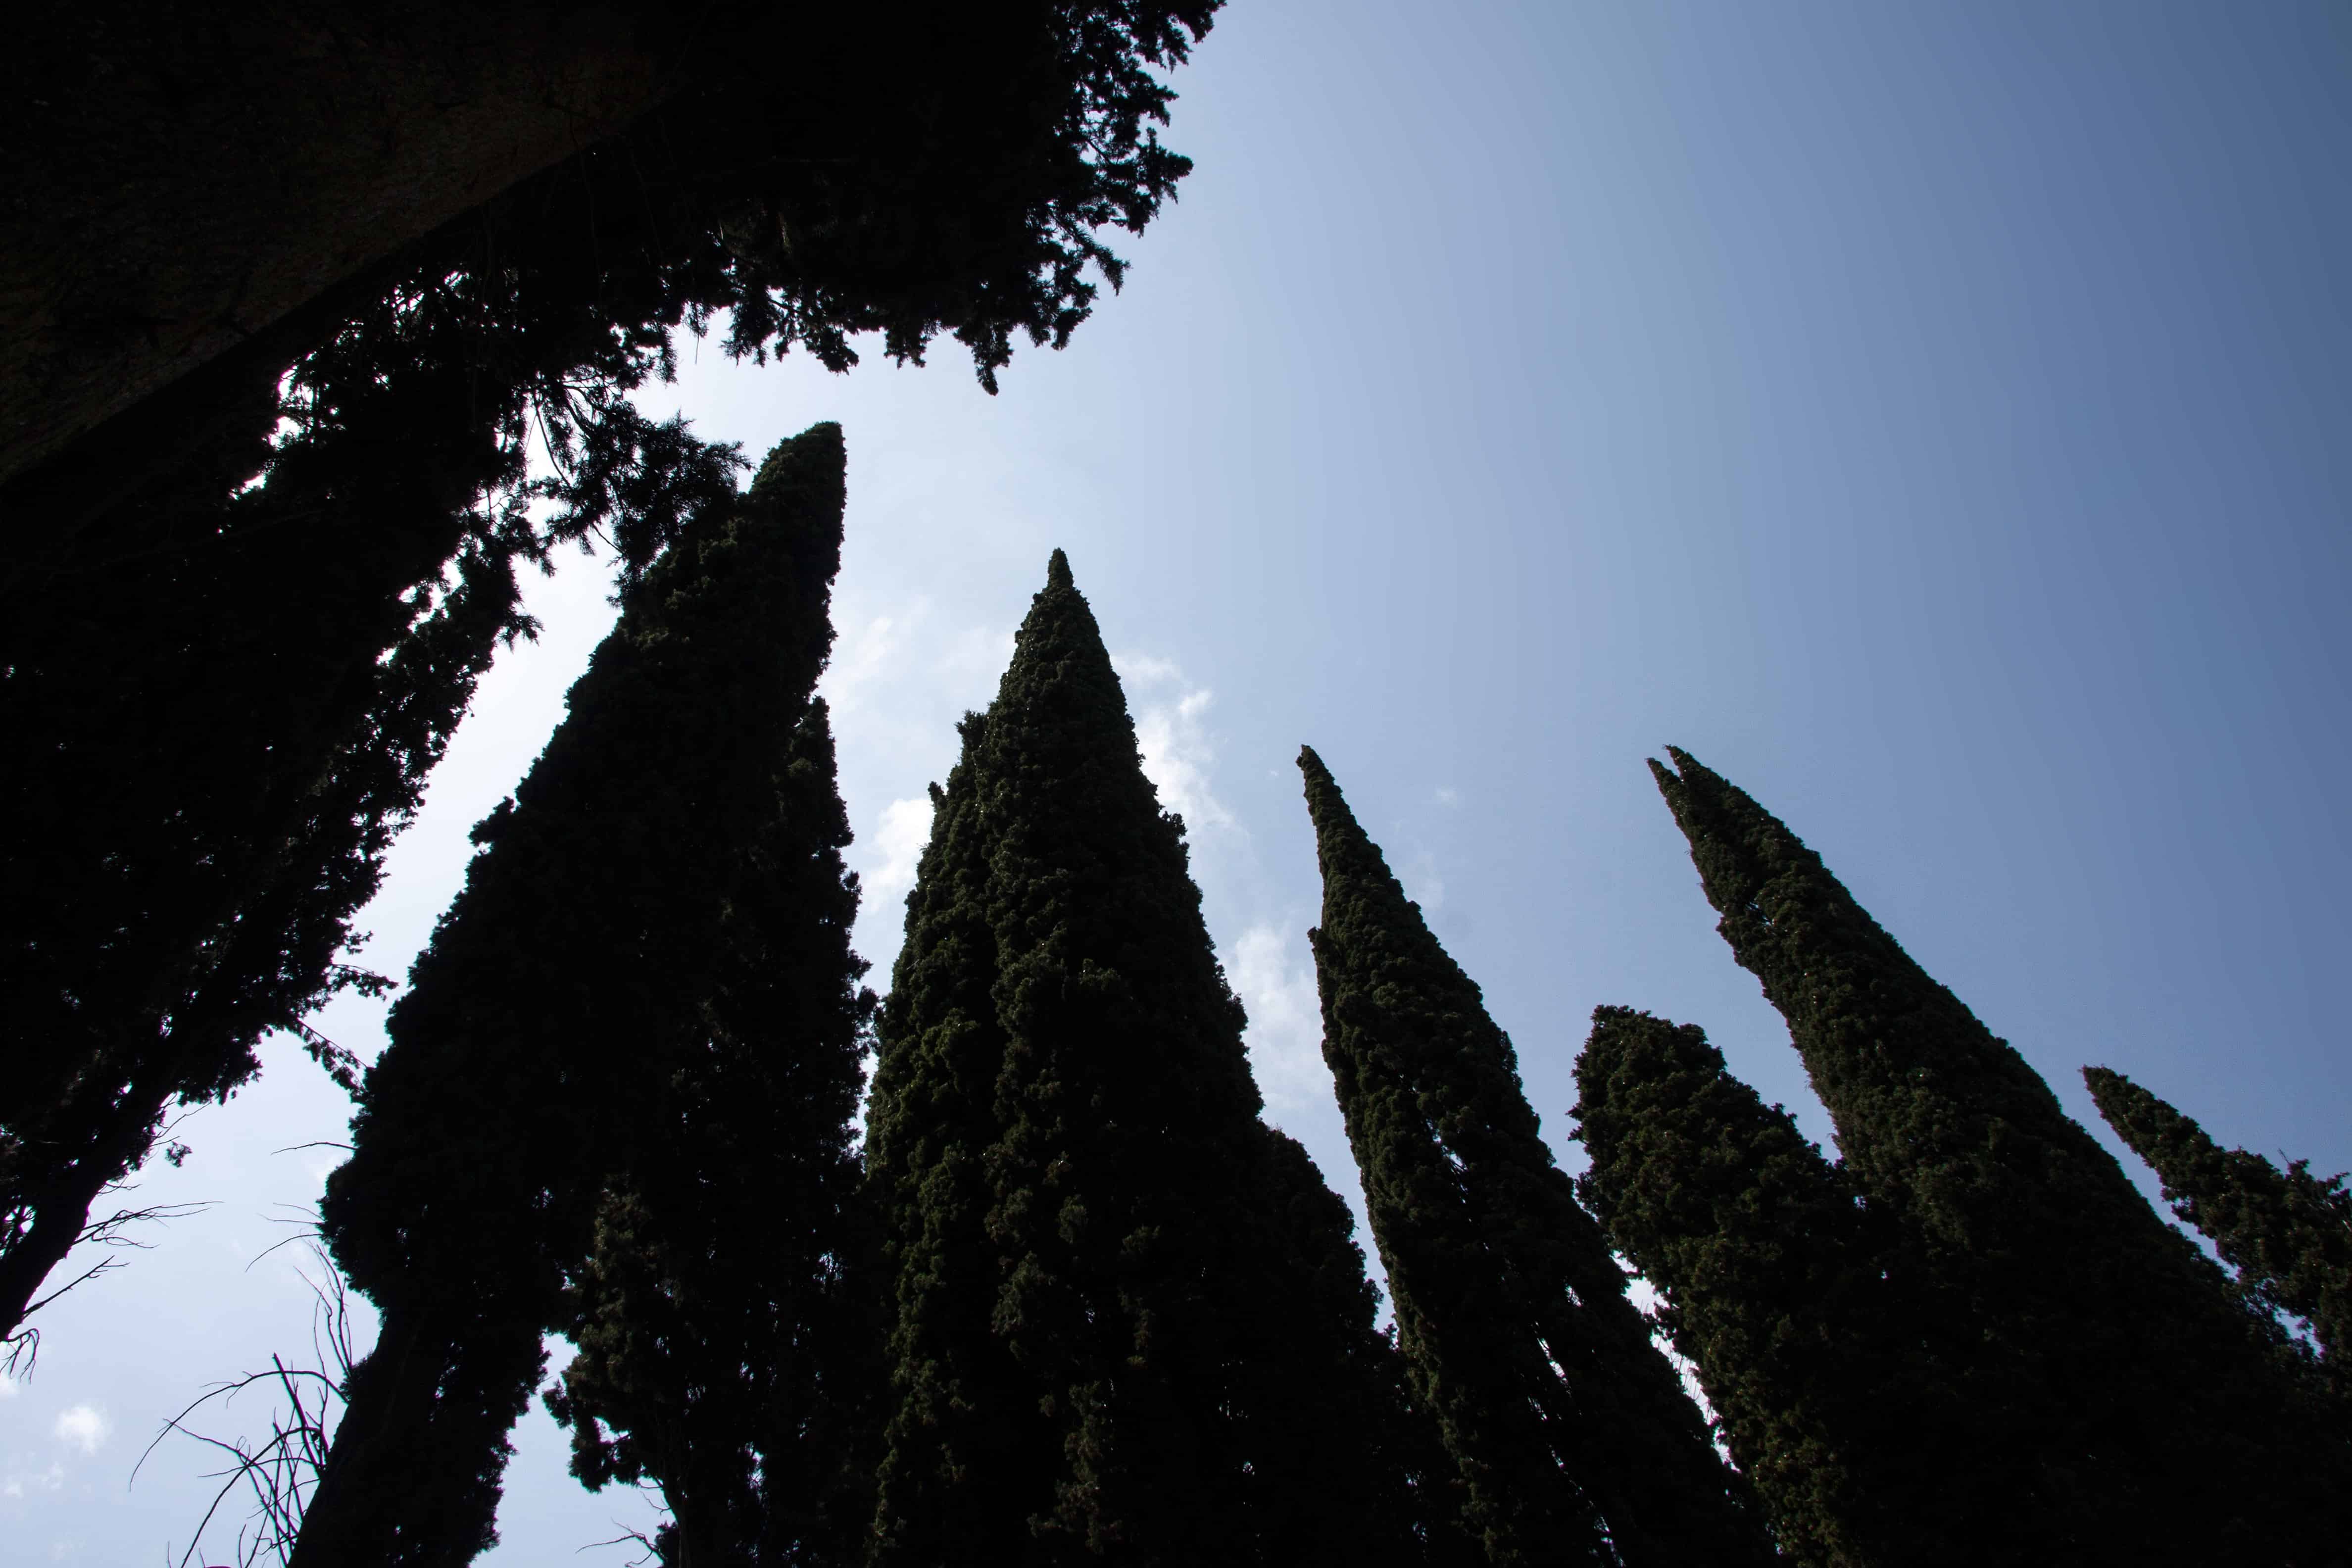 italian cypress